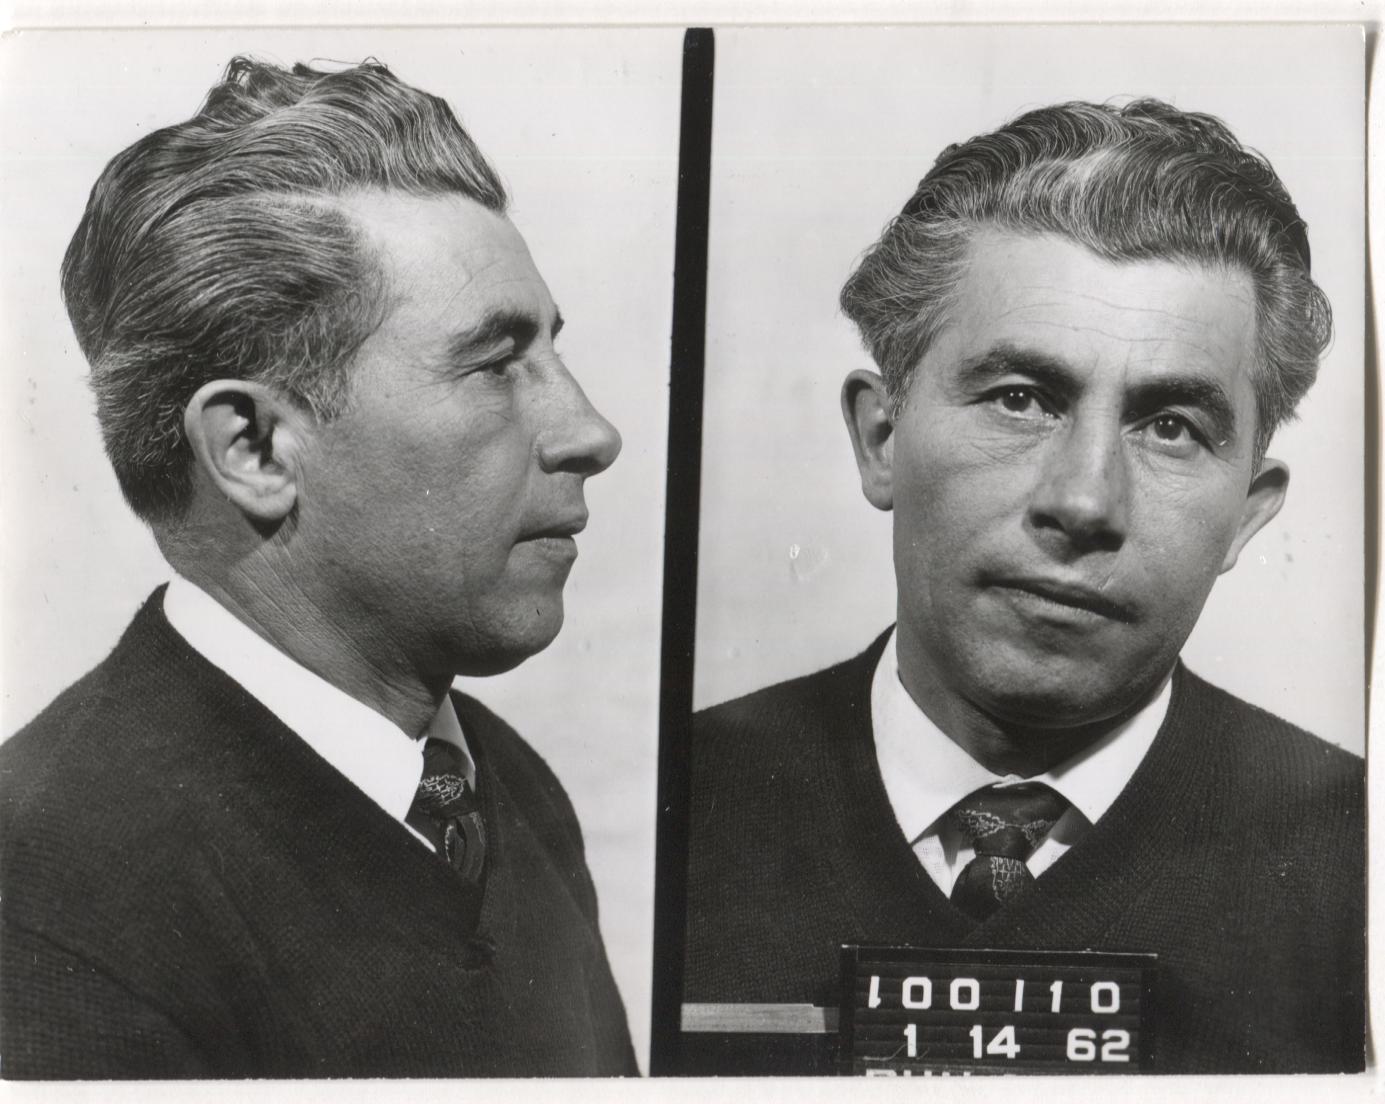 Dominick DelVecchia Mugshot - Arrested on 1/14/1962 for Running a Gambling House